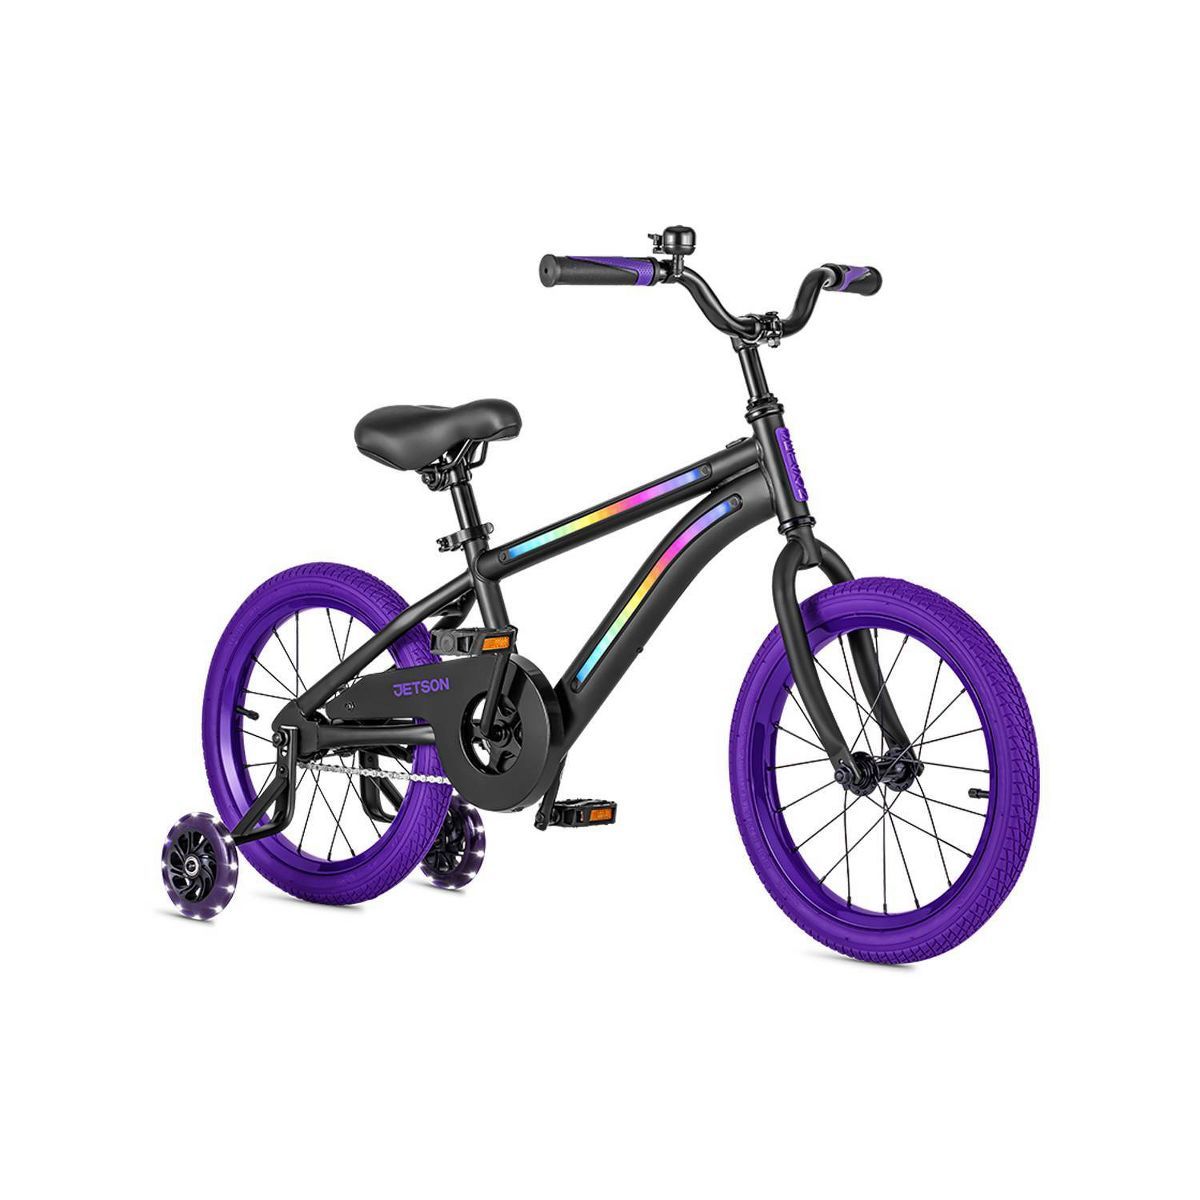 Jetson Light Rider 16" Kids'  Light Up Bike - Black/Purple | Target